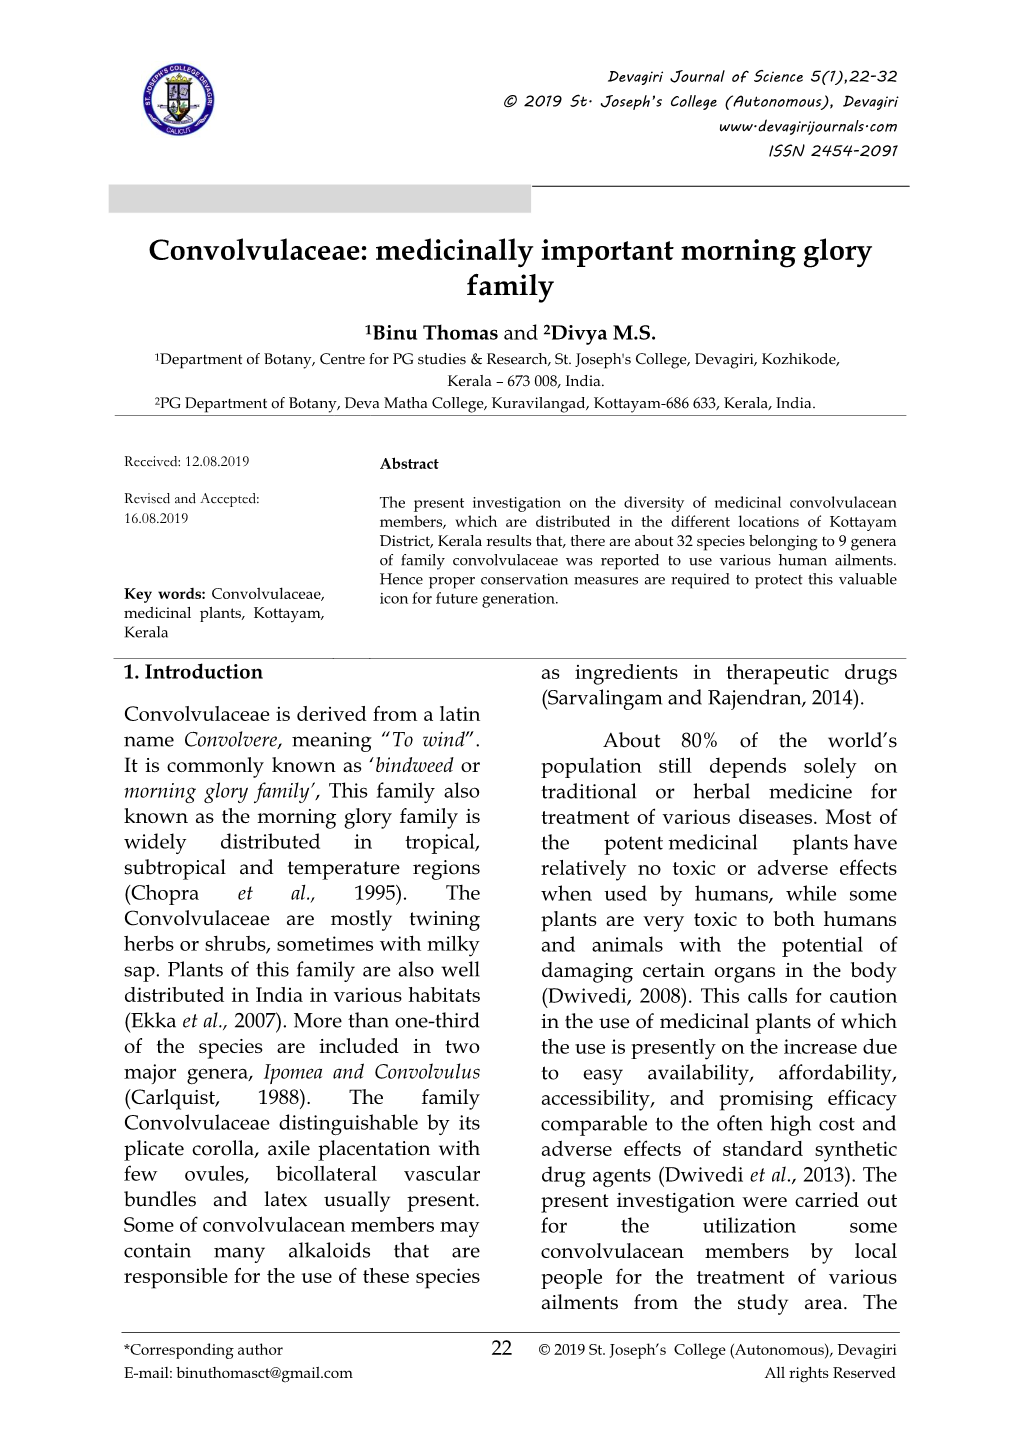 Convolvulaceae: Medicinally Important Morning Glory Family